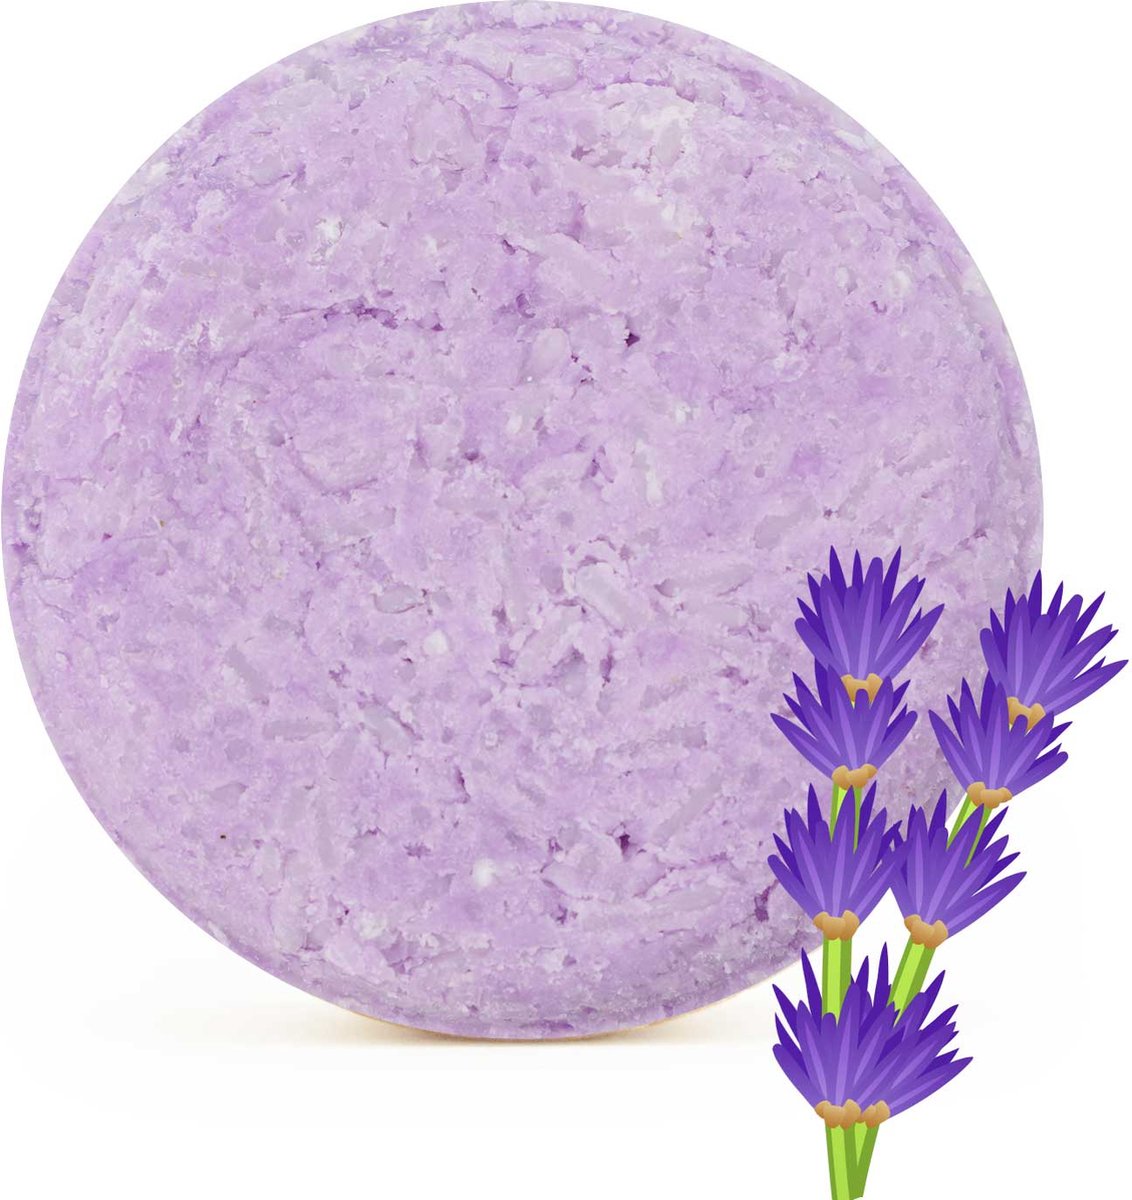 Shampoo Bar Lavendel 65g - Anti-roos - Neutraal tot vet haar - Zero Waste - Bamboozy